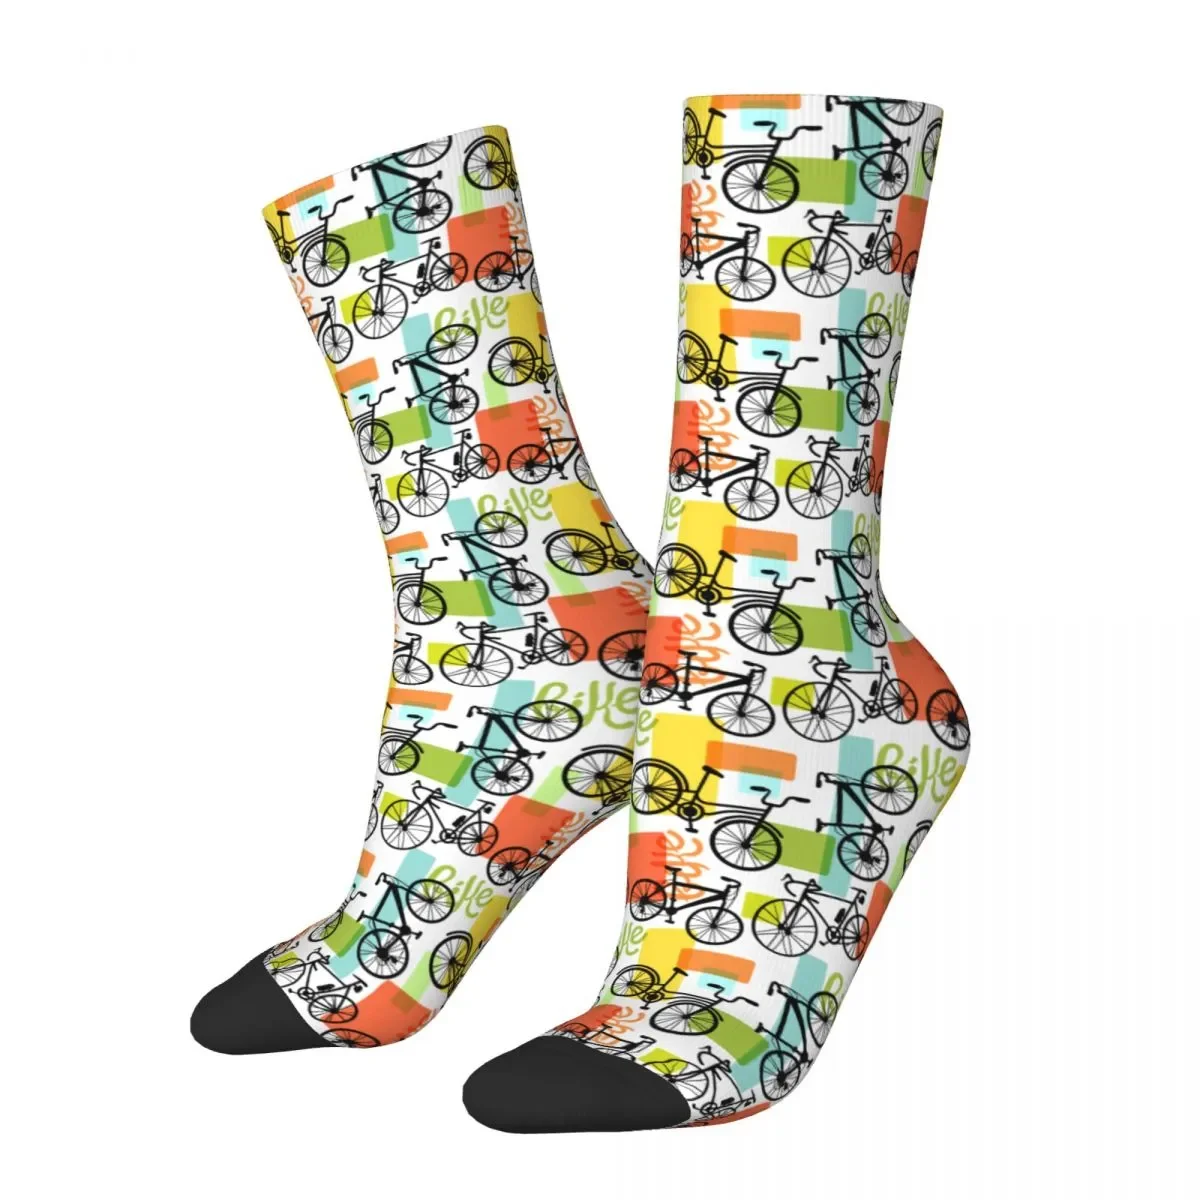 

Crew Socks Biking Lifestyle Bike Cycling Merch for Male Cozy Printed Socks All Seasons Best Gifts Idea